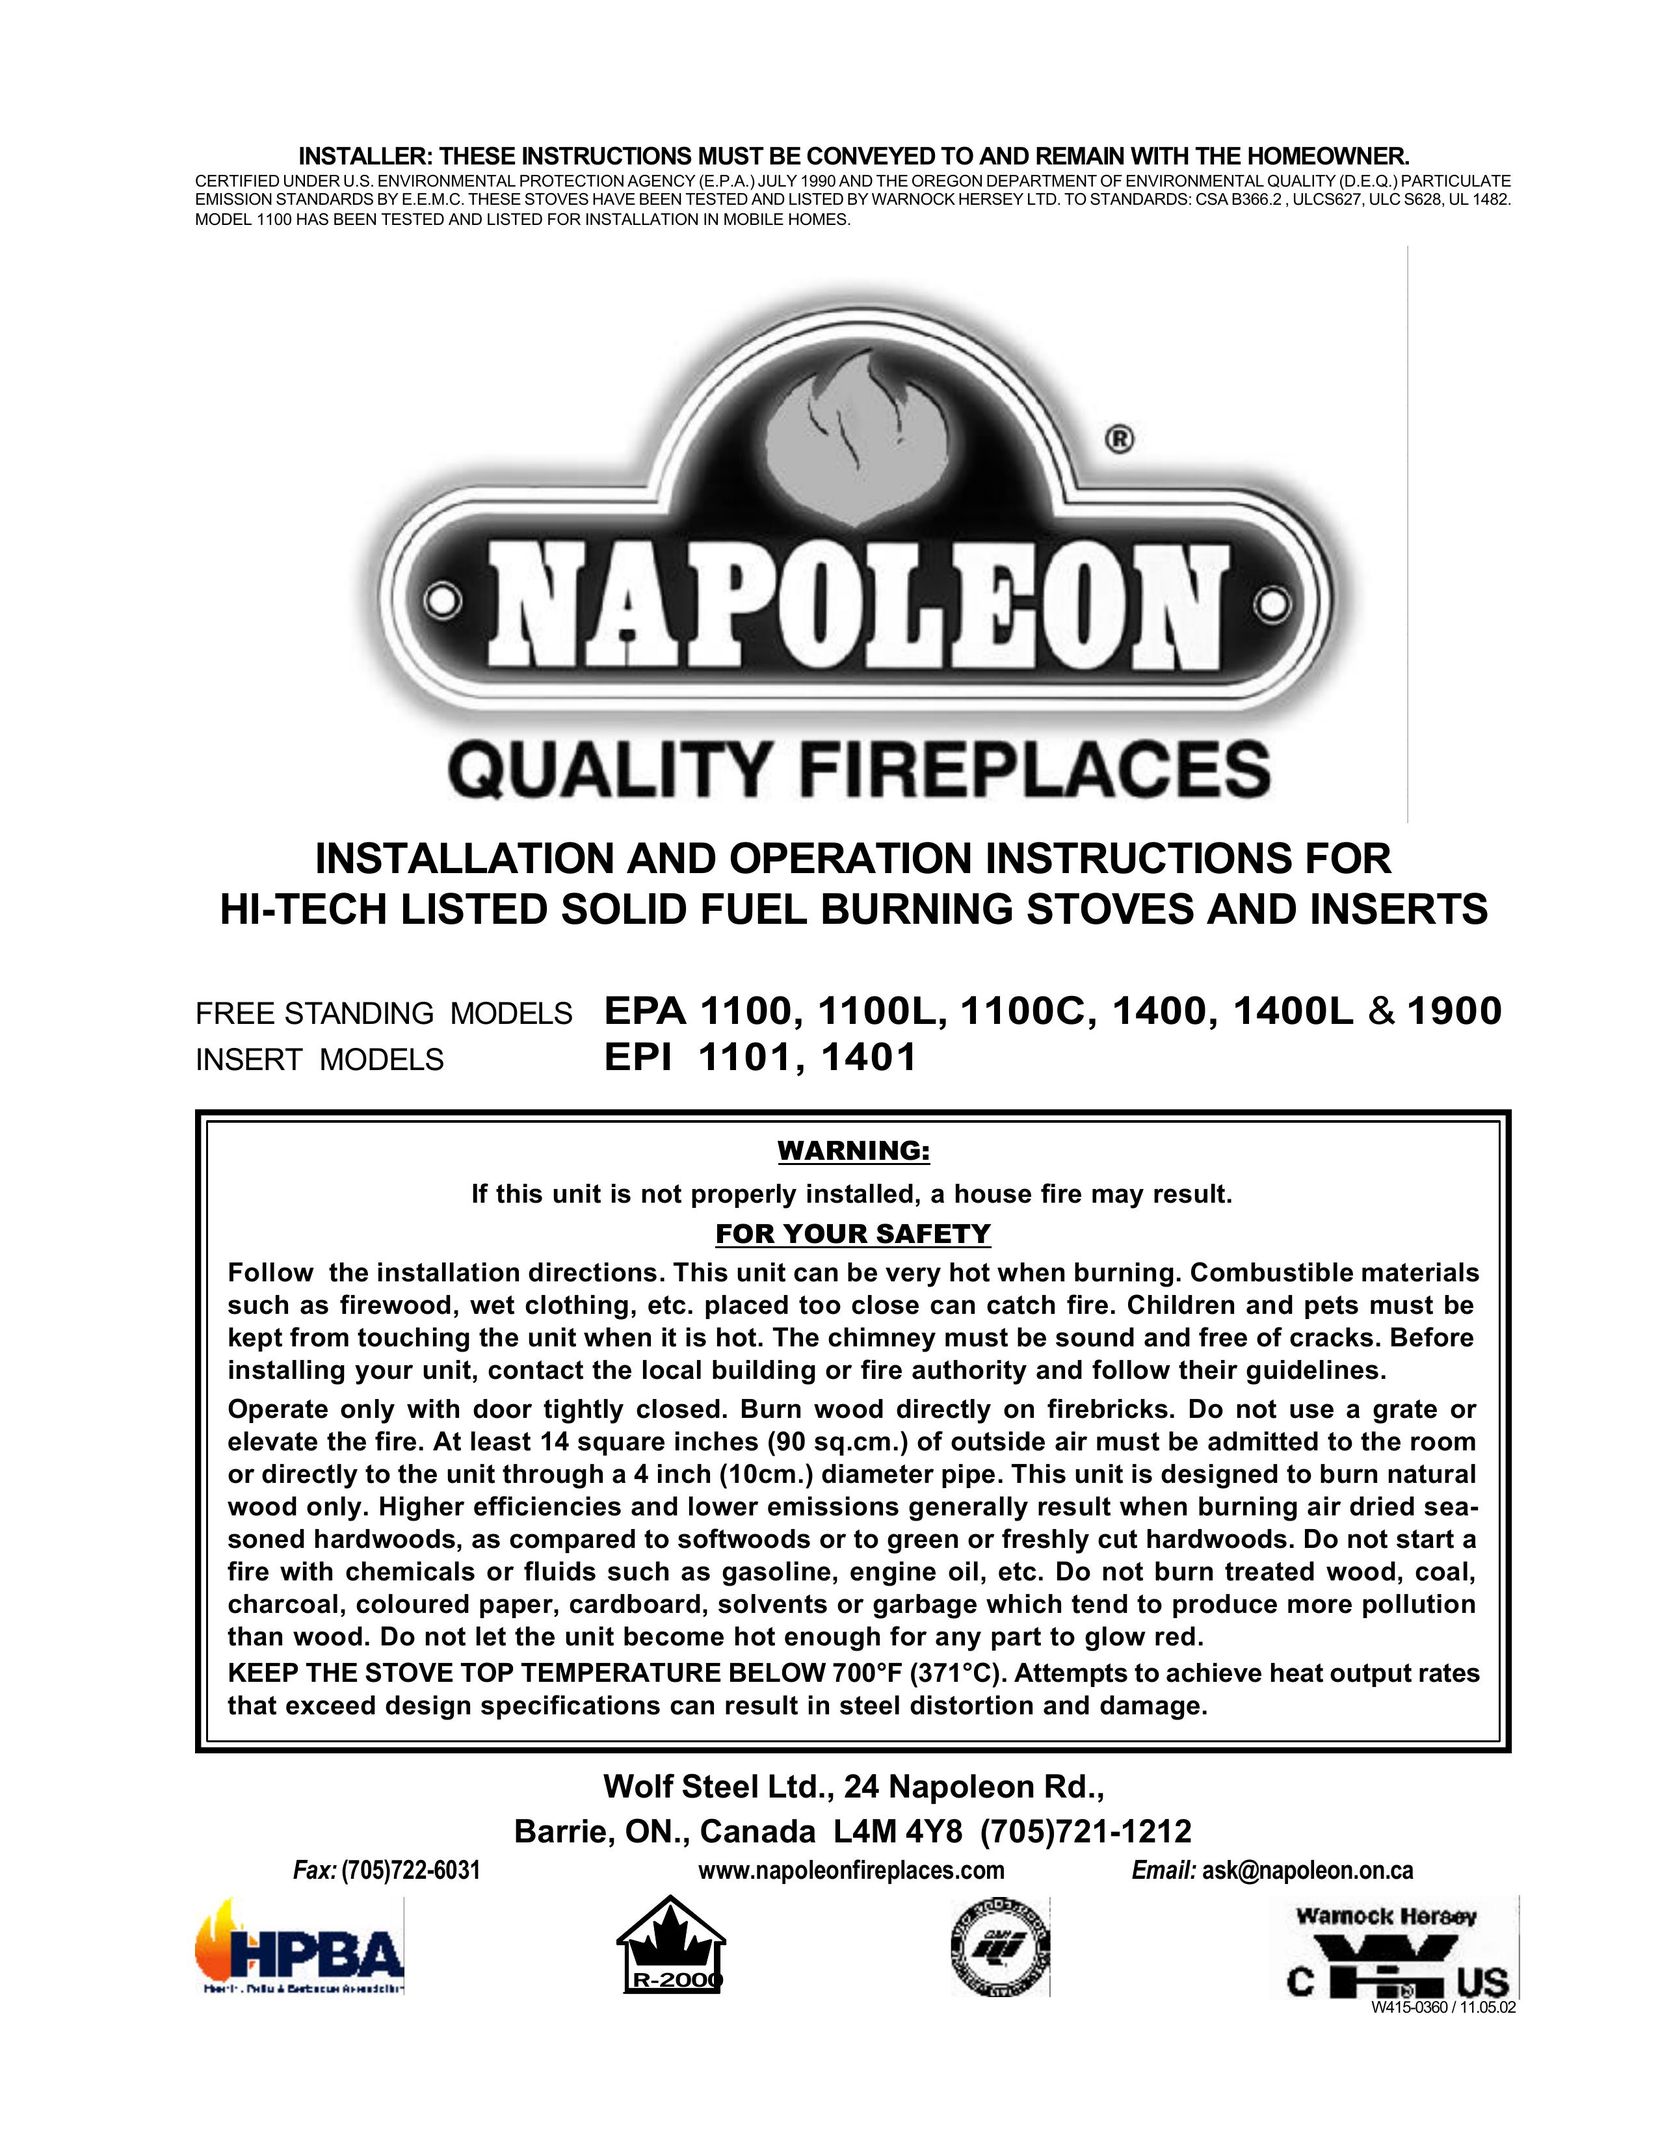 Napoleon Fireplaces EPA 1400L Stove User Manual